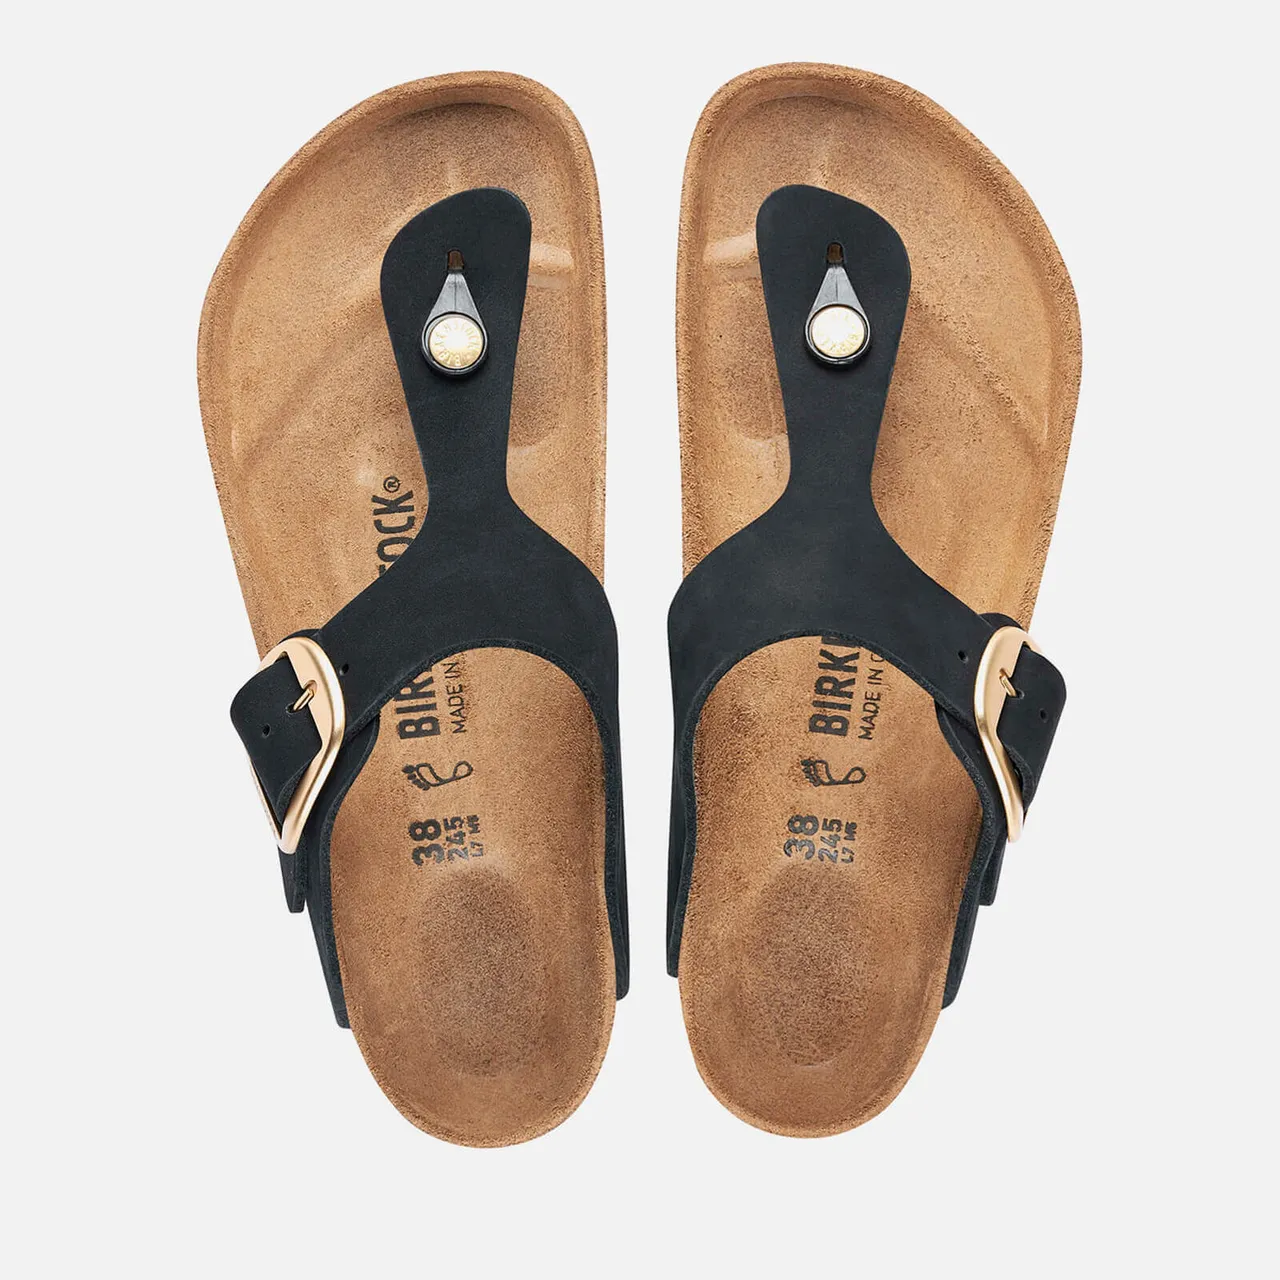 Birkenstock Women's Nubuck Narrow-Fit Leather Toe Sandals - EU 37/UK